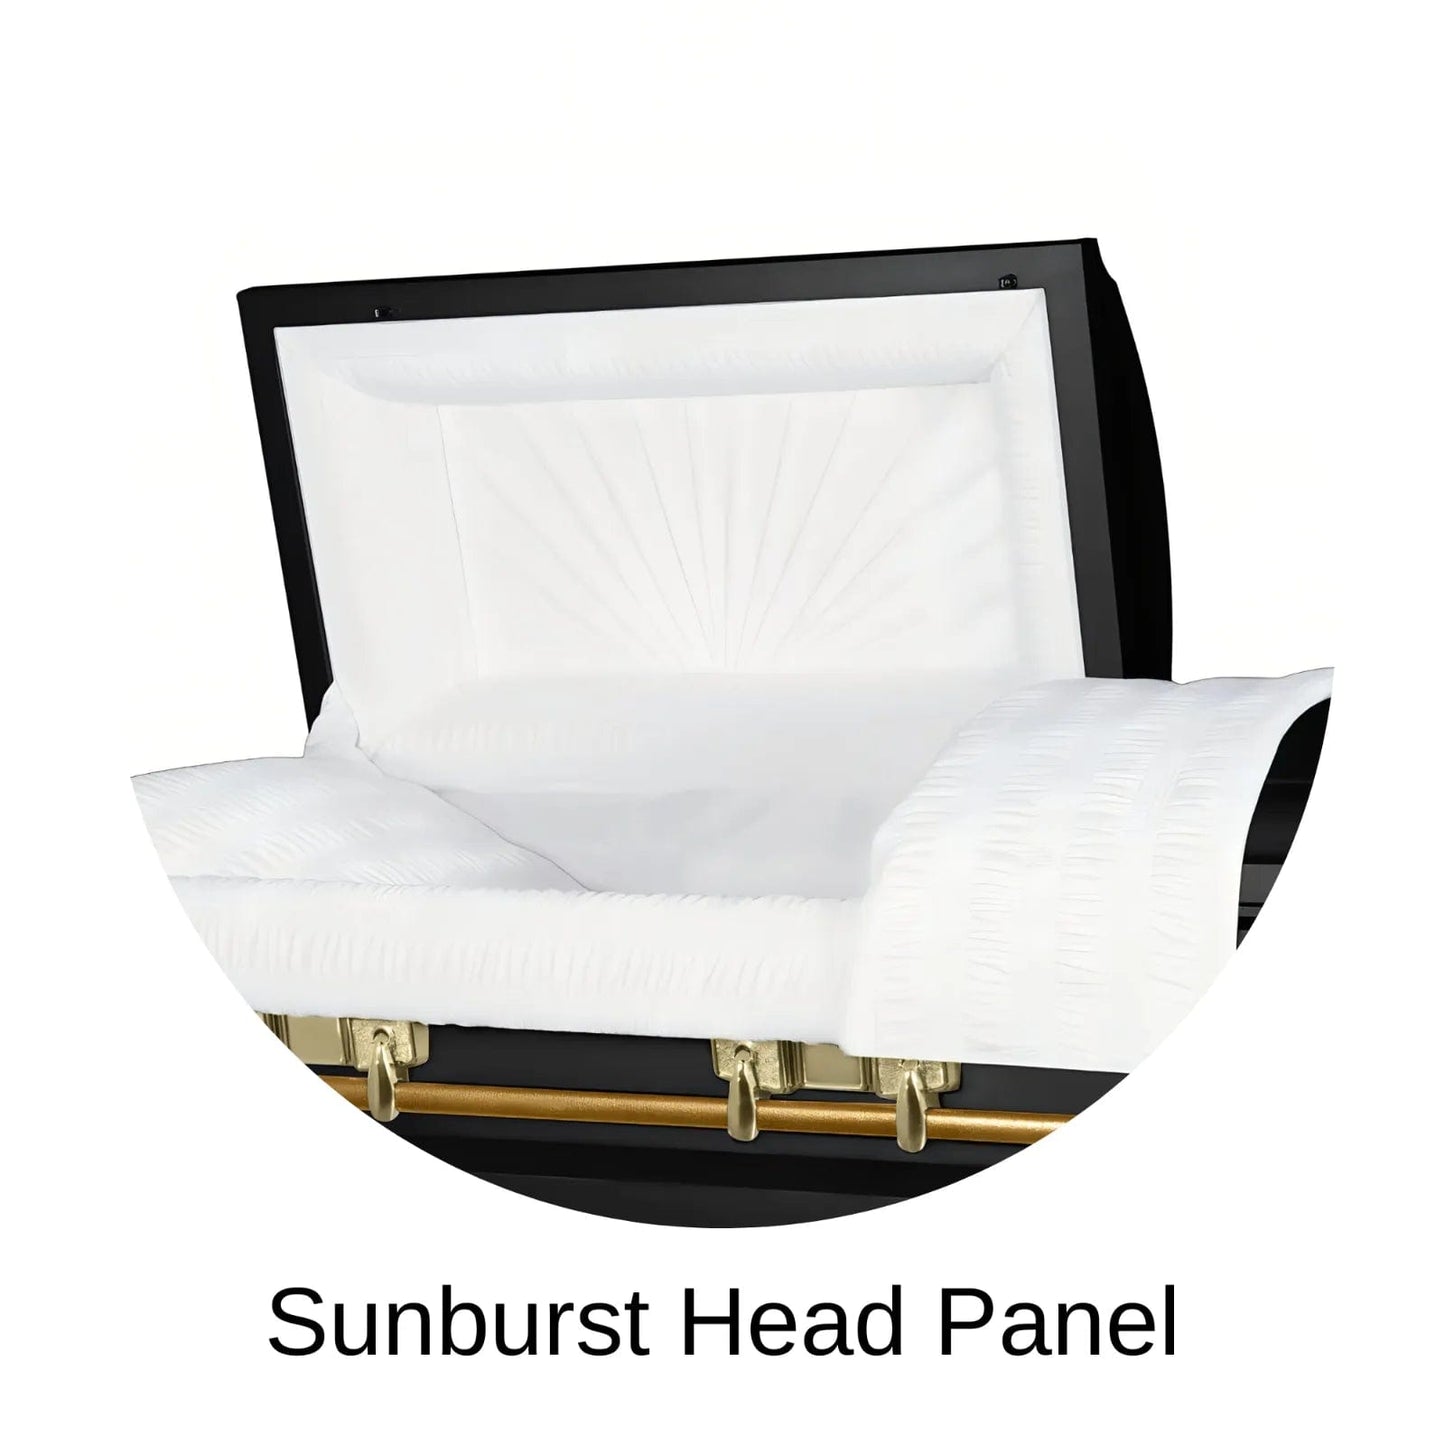 Sunburst head panel of Titan Casket Satin Series Casket